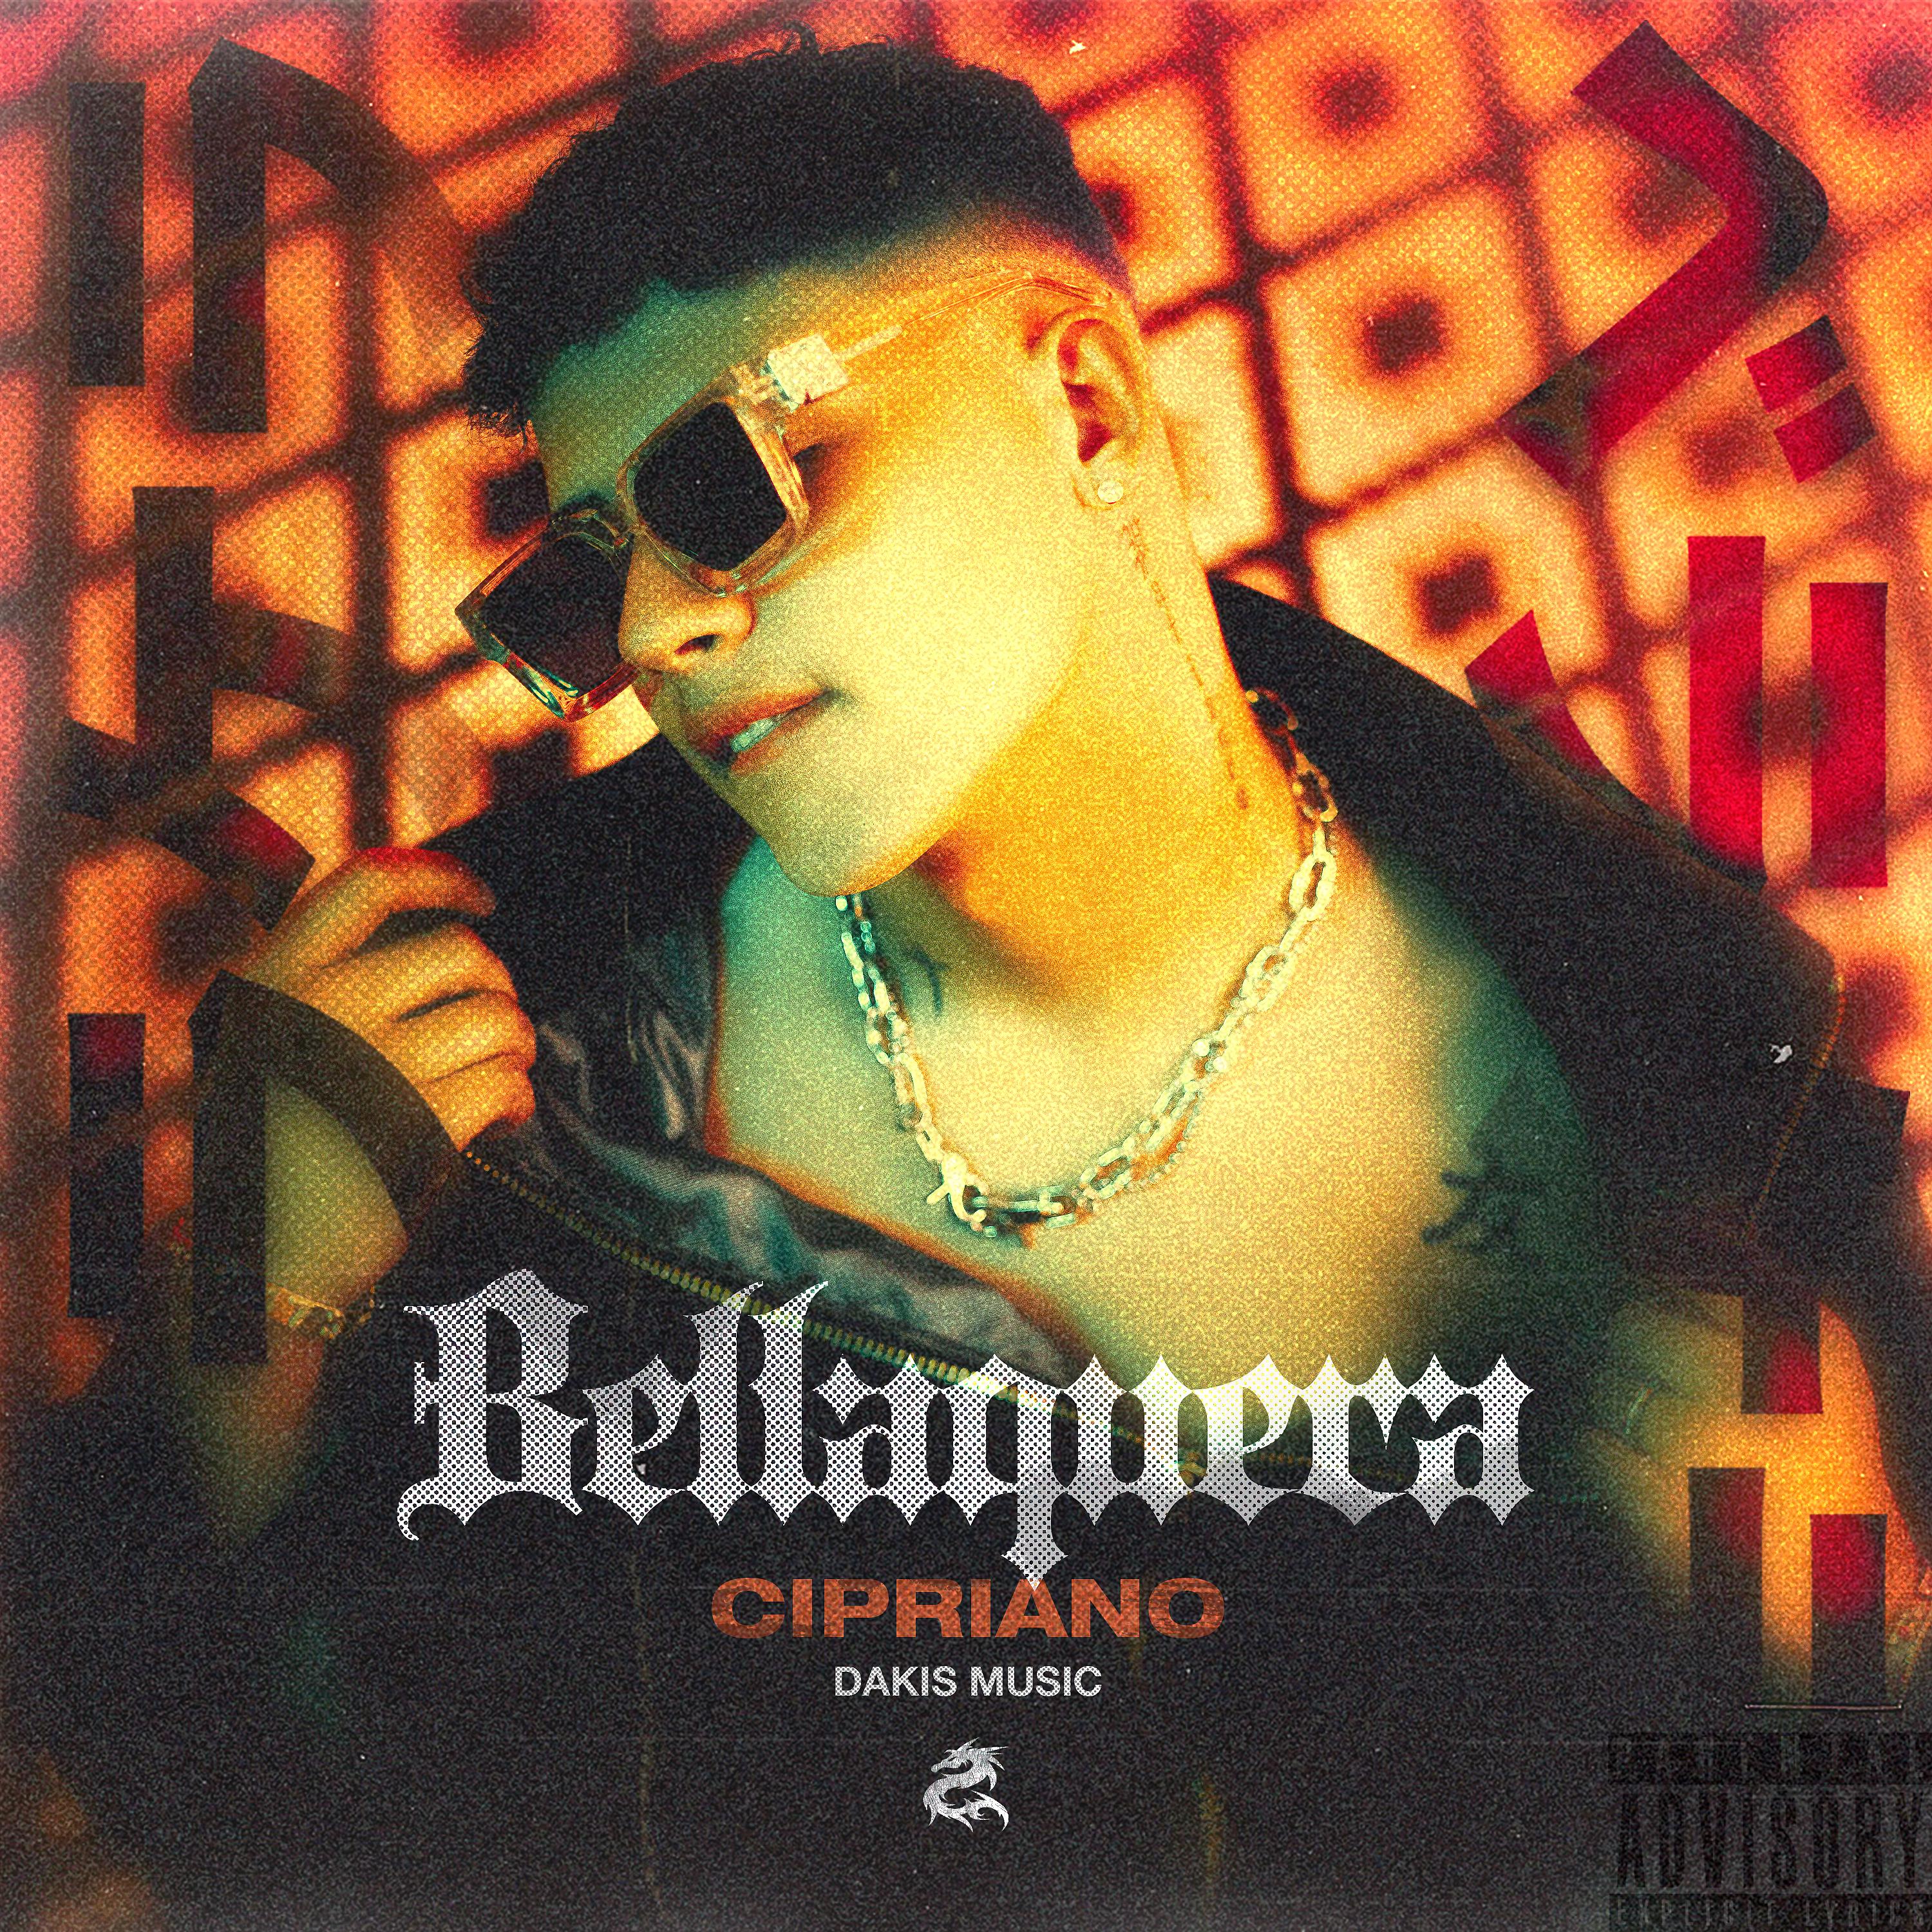 Постер альбома Bellaquera